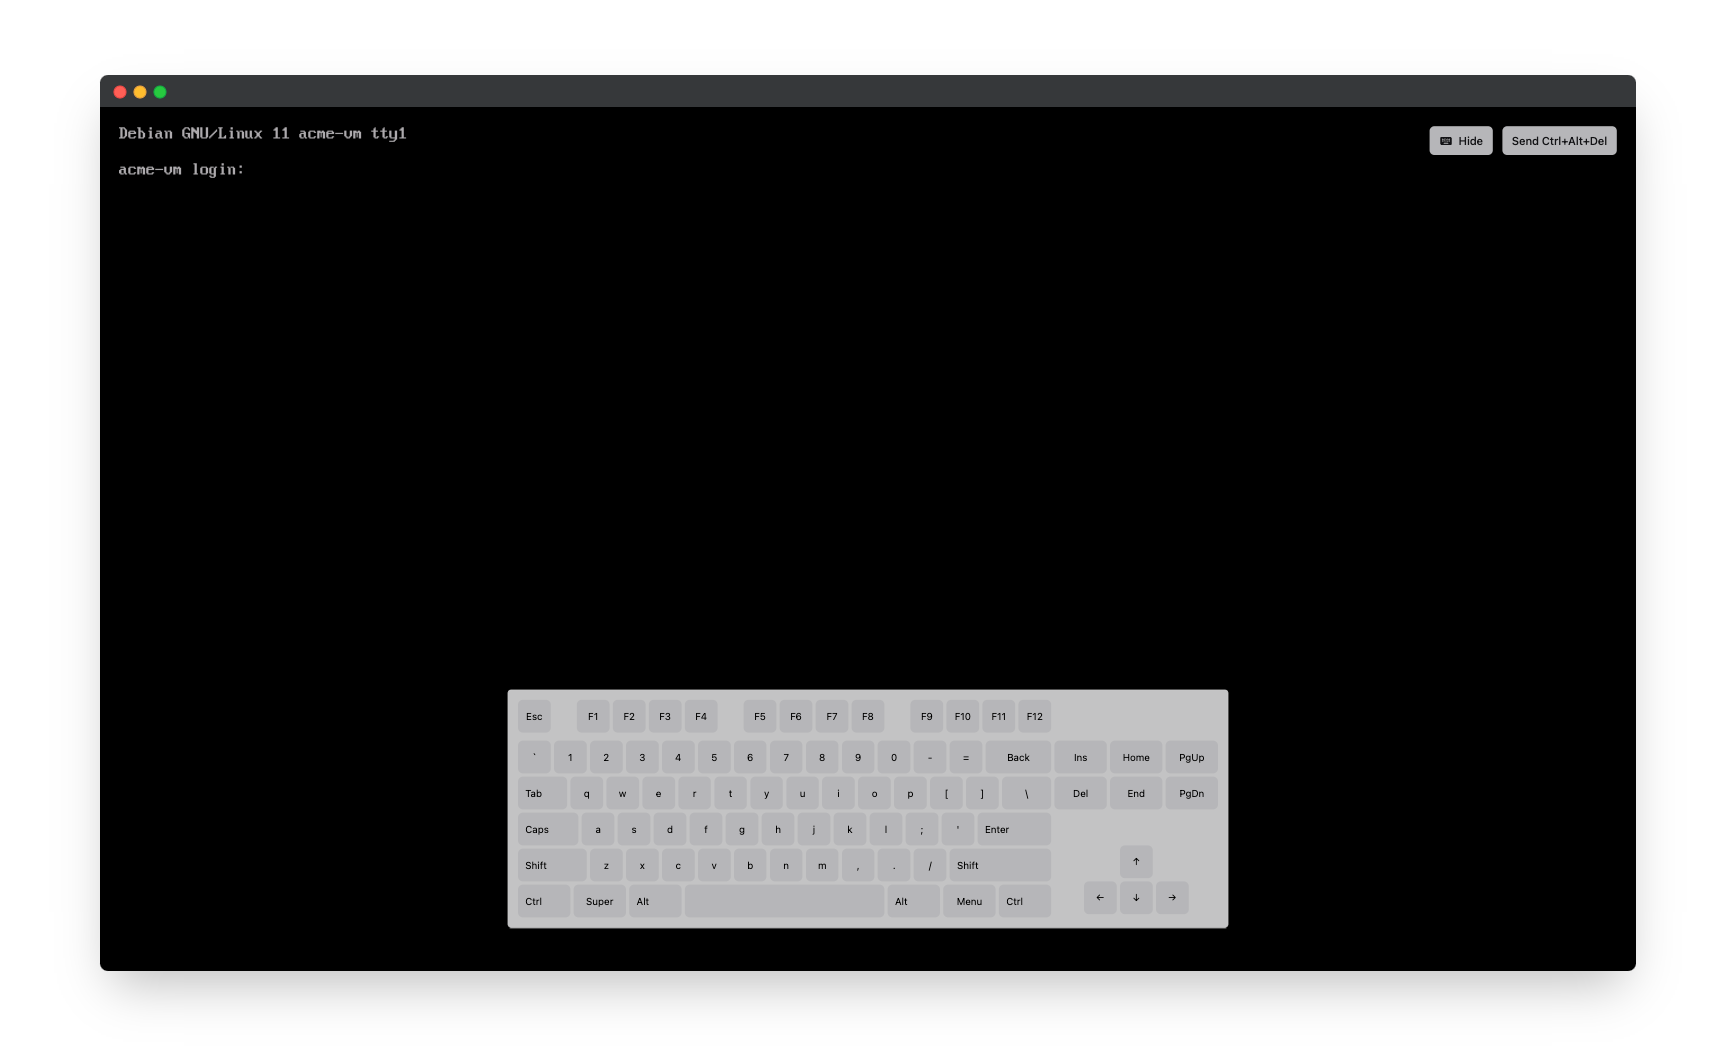 Virtual machine details - on screen keyboard